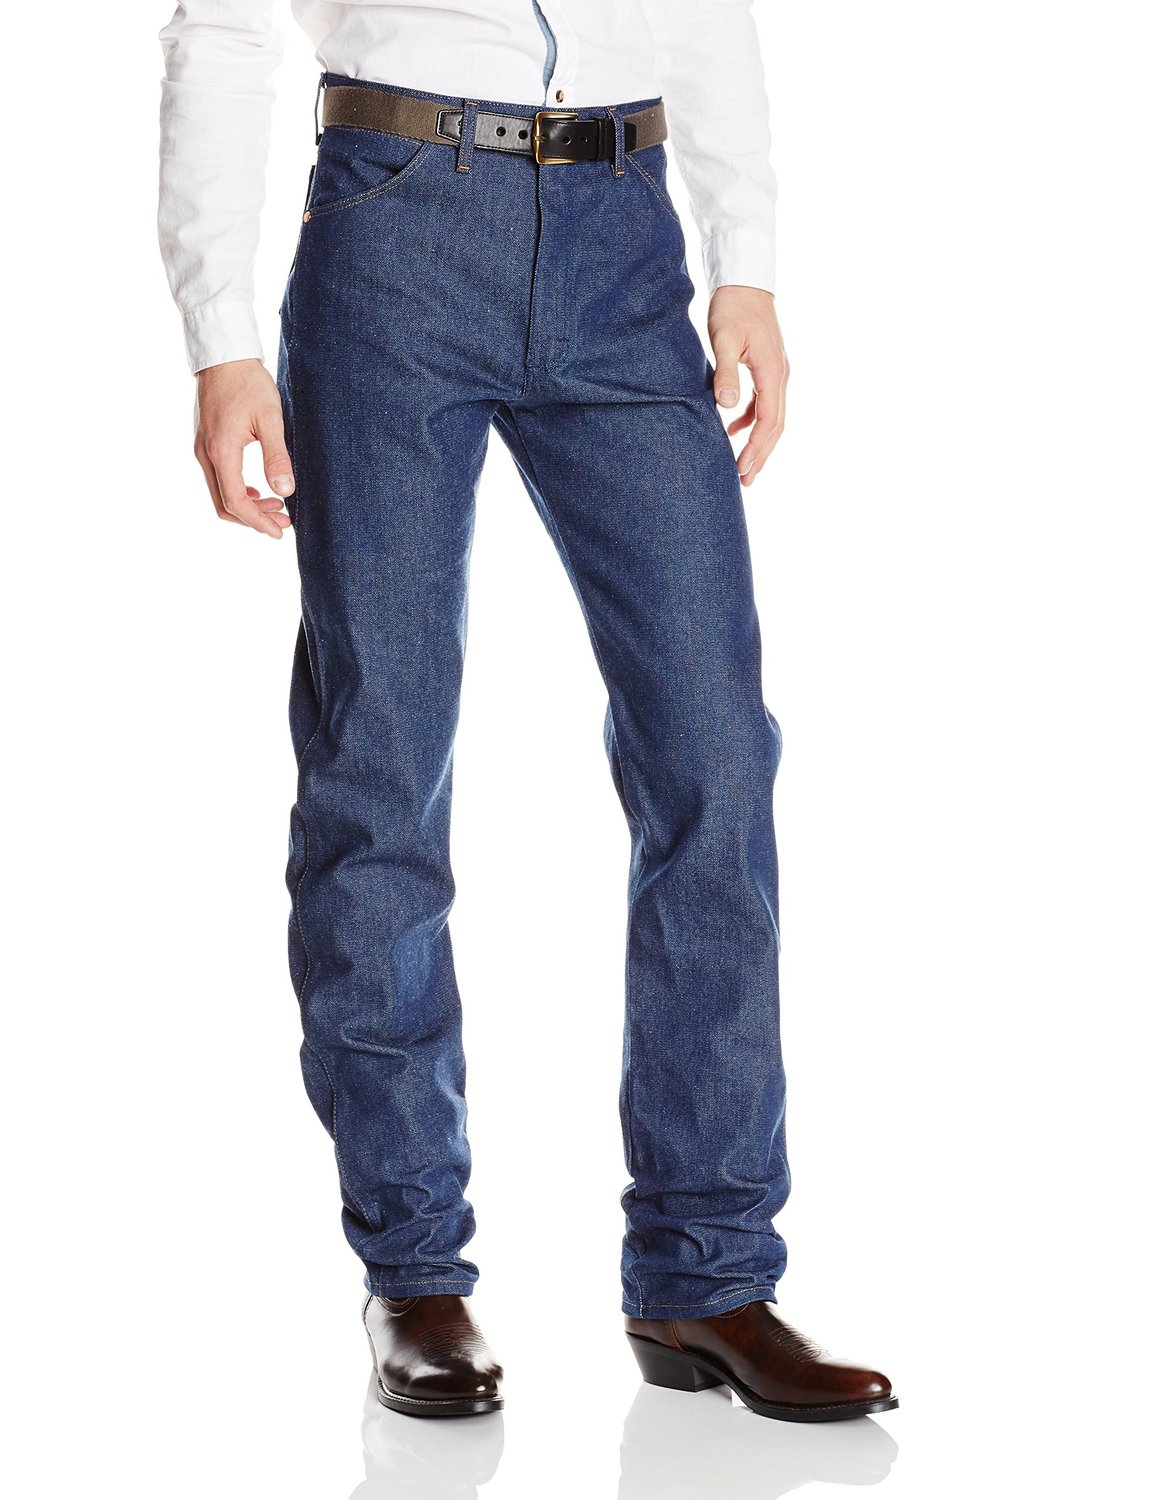 wrangler original cowboy cut jeans